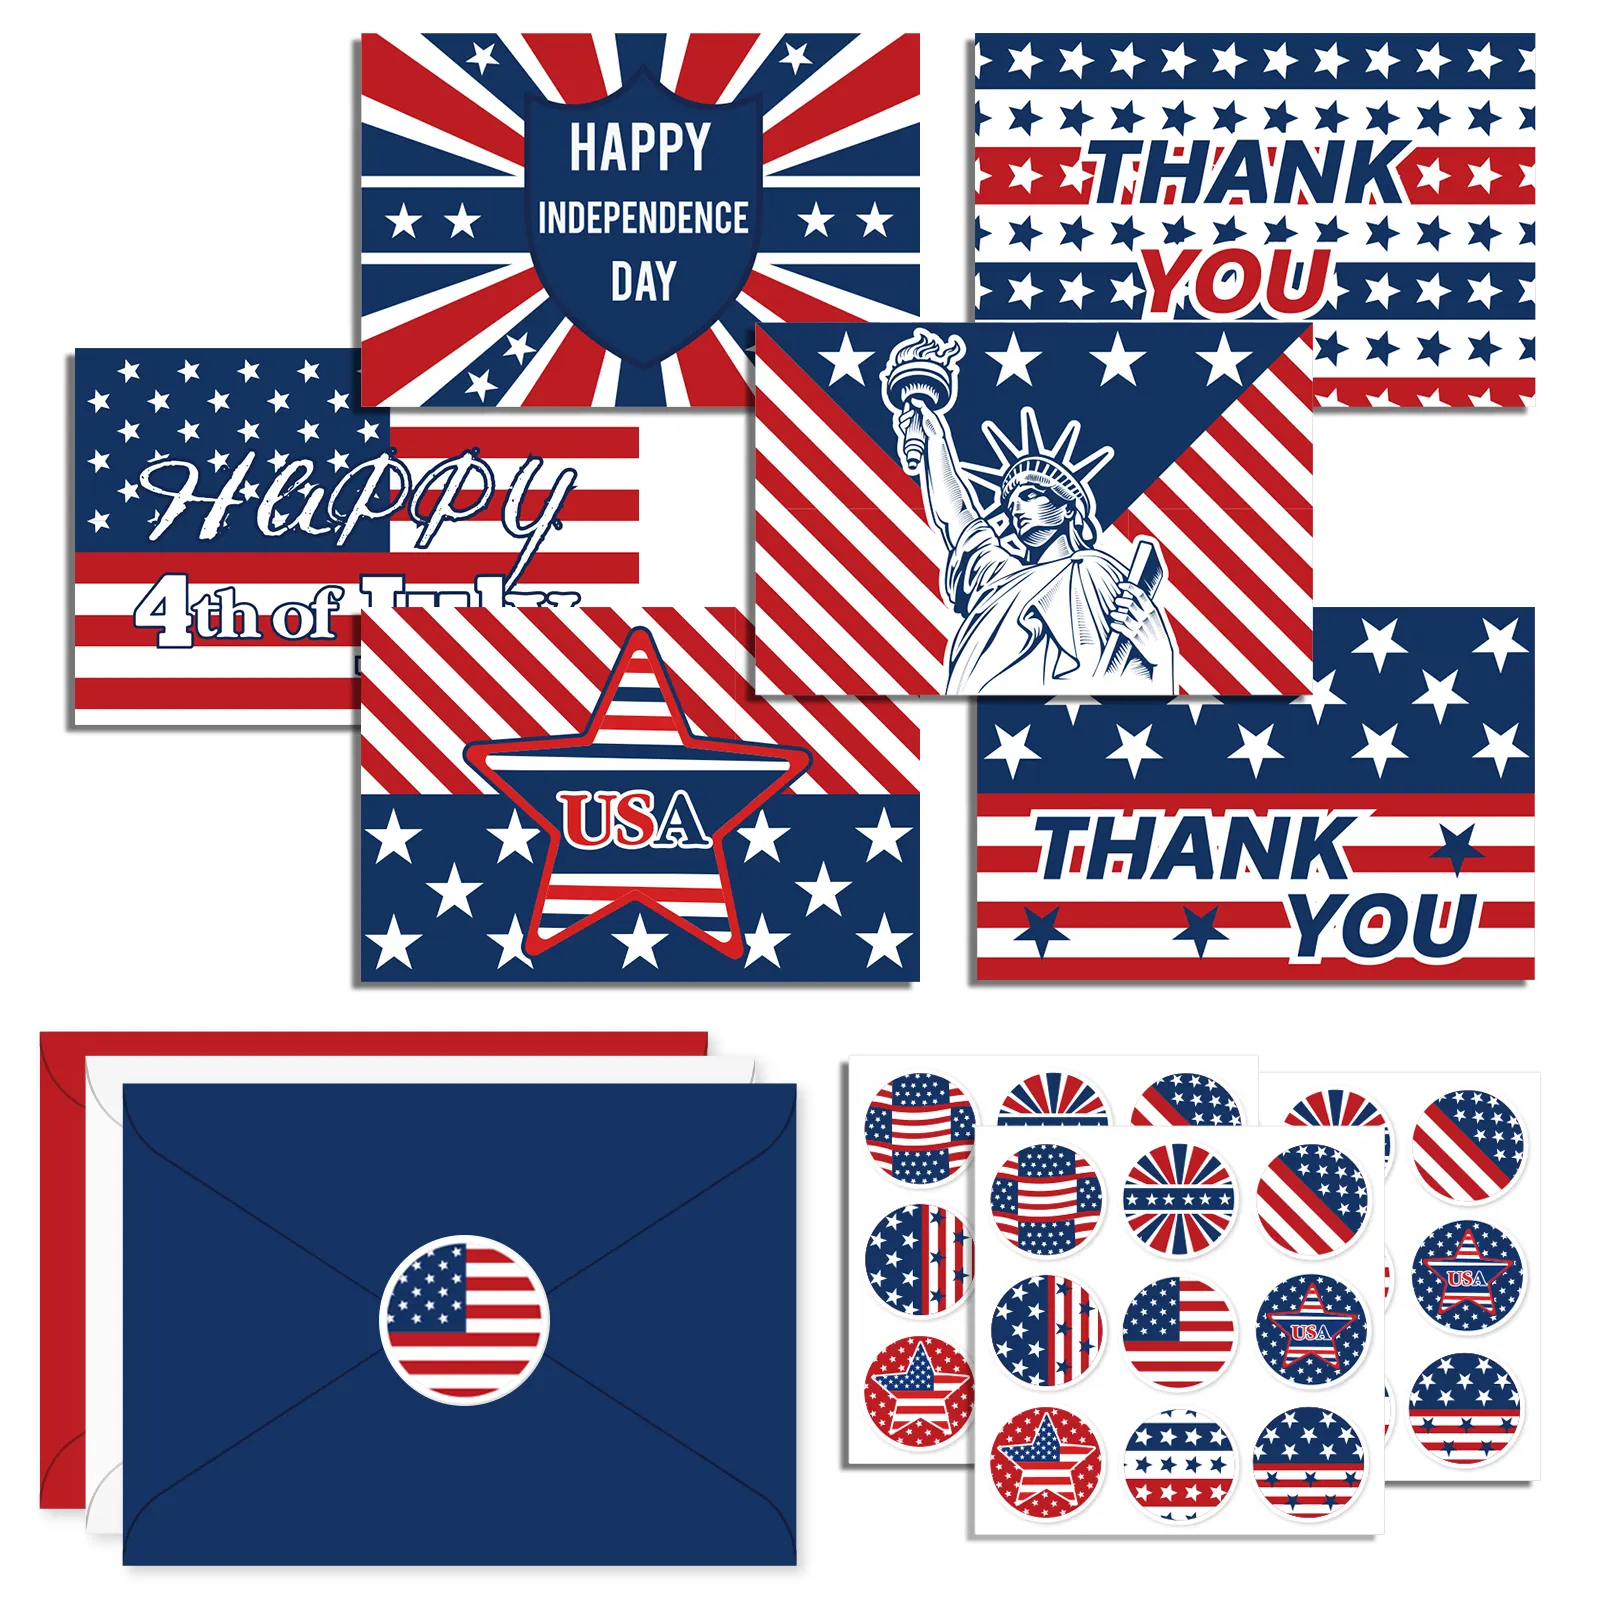 HK027 해피 7 월 4 일 파티 장식 미국 국기 인사말 카드 독립 기념일 감사 카드 봉투